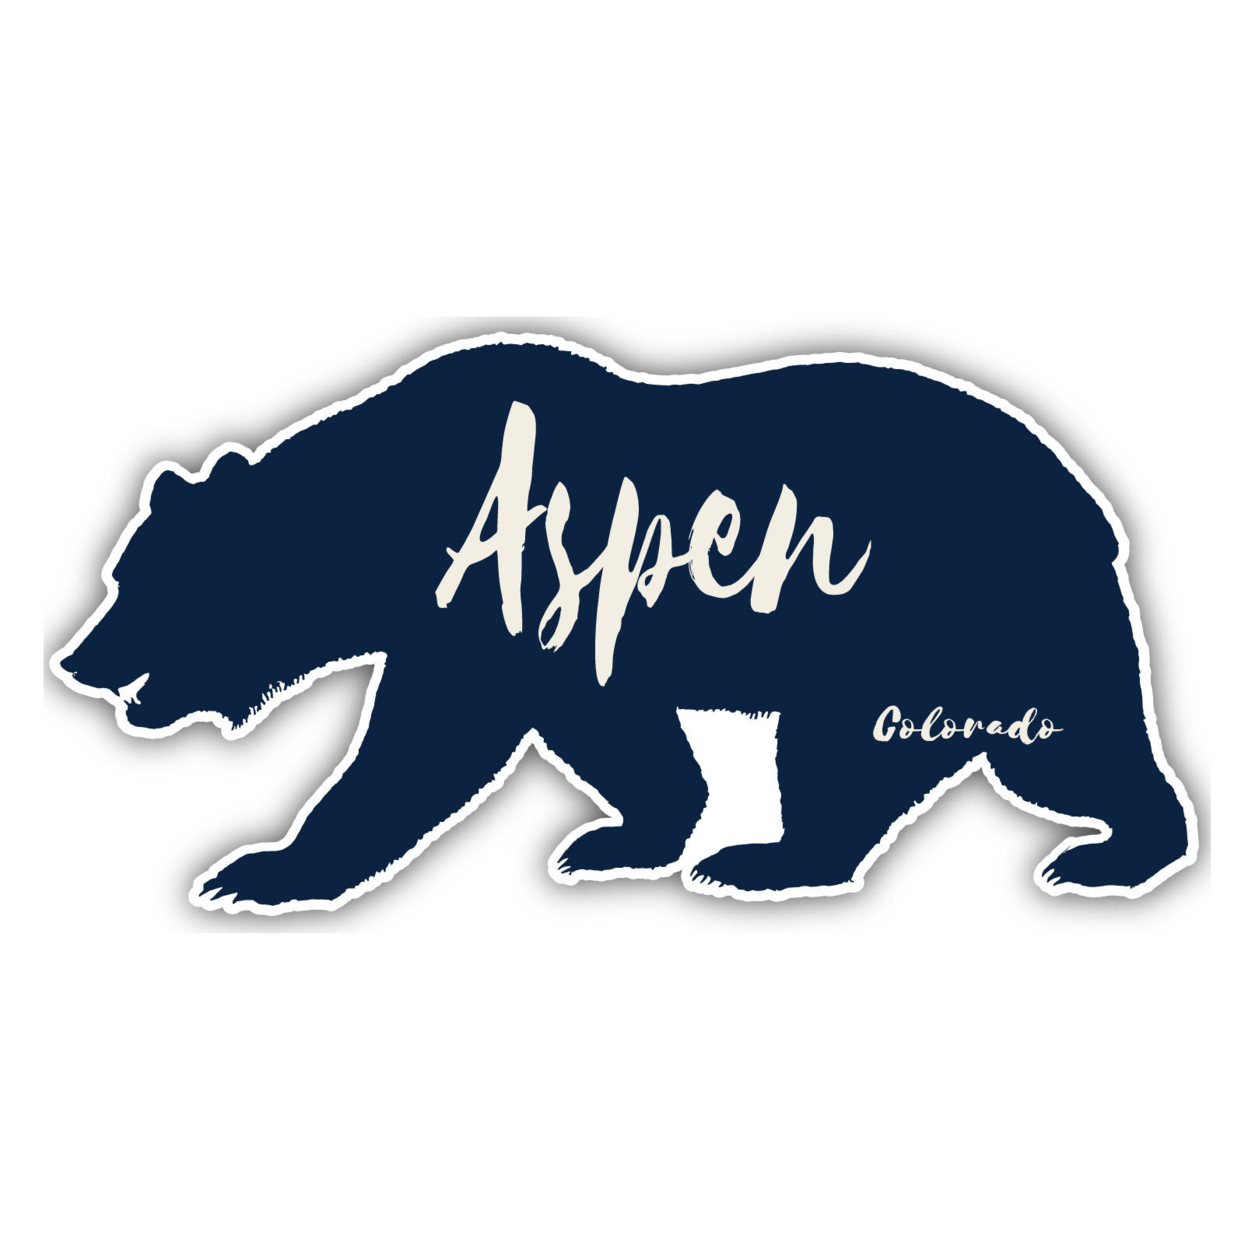 Aspen Colorado Souvenir Decorative Stickers (Choose Theme And Size) - Single Unit, 4-Inch, Bear